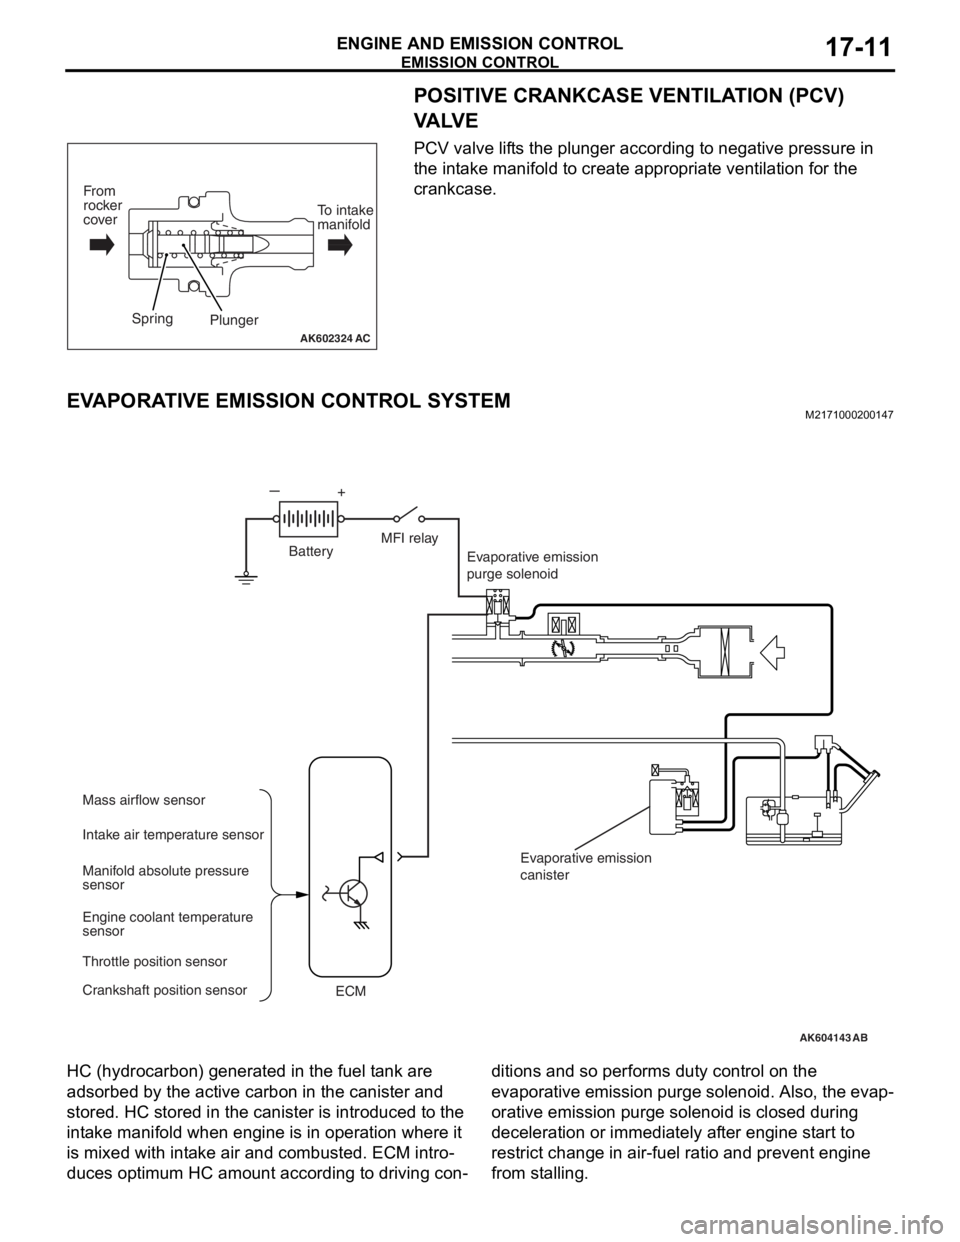 MITSUBISHI LANCER EVOLUTION X 2008  Workshop Manual EMISSION CONTROL
ENGINE AND EMISSION CONTROL17-11
POSITIVE CRANKCASE VENTILATION (PCV) 
VA LV E
PCV valve lifts the plunger according to negative pressure in 
the intake manifold to create appropriate